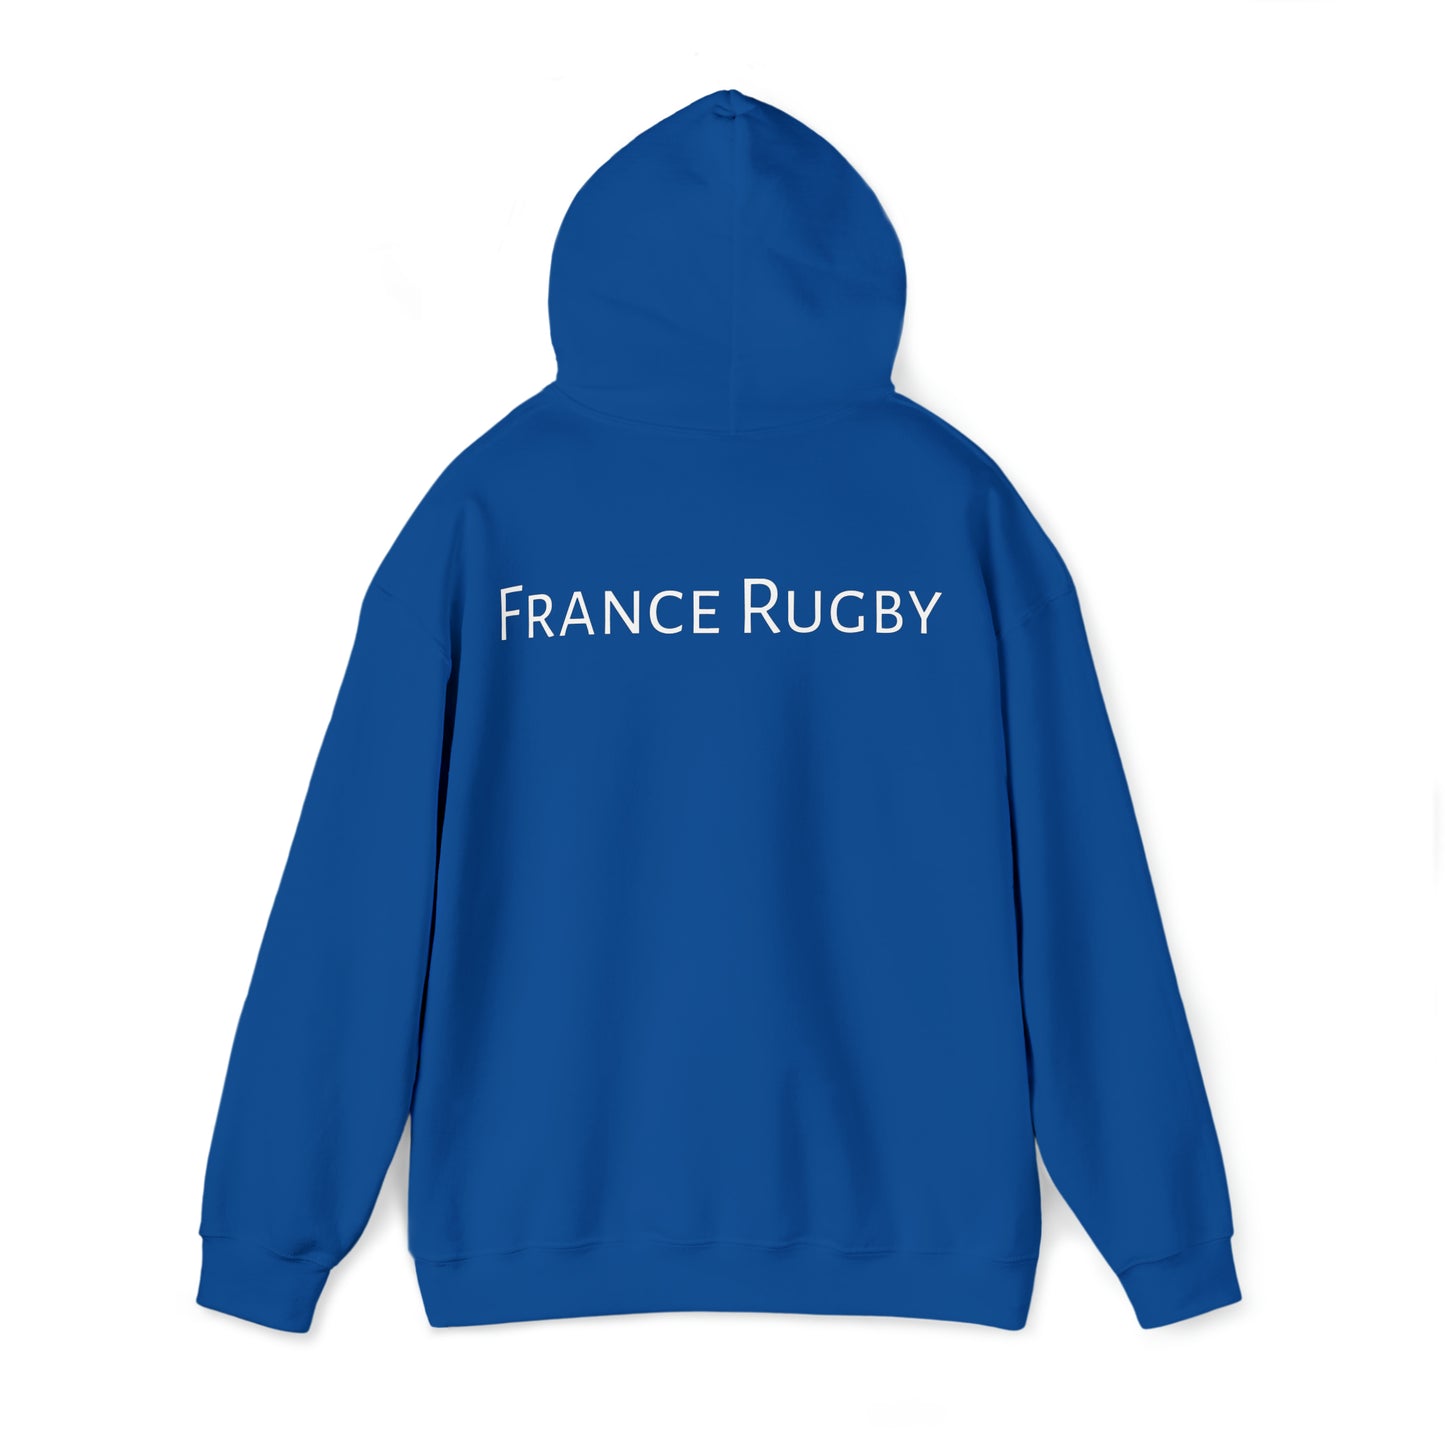 France Celebrating - dark hoodies